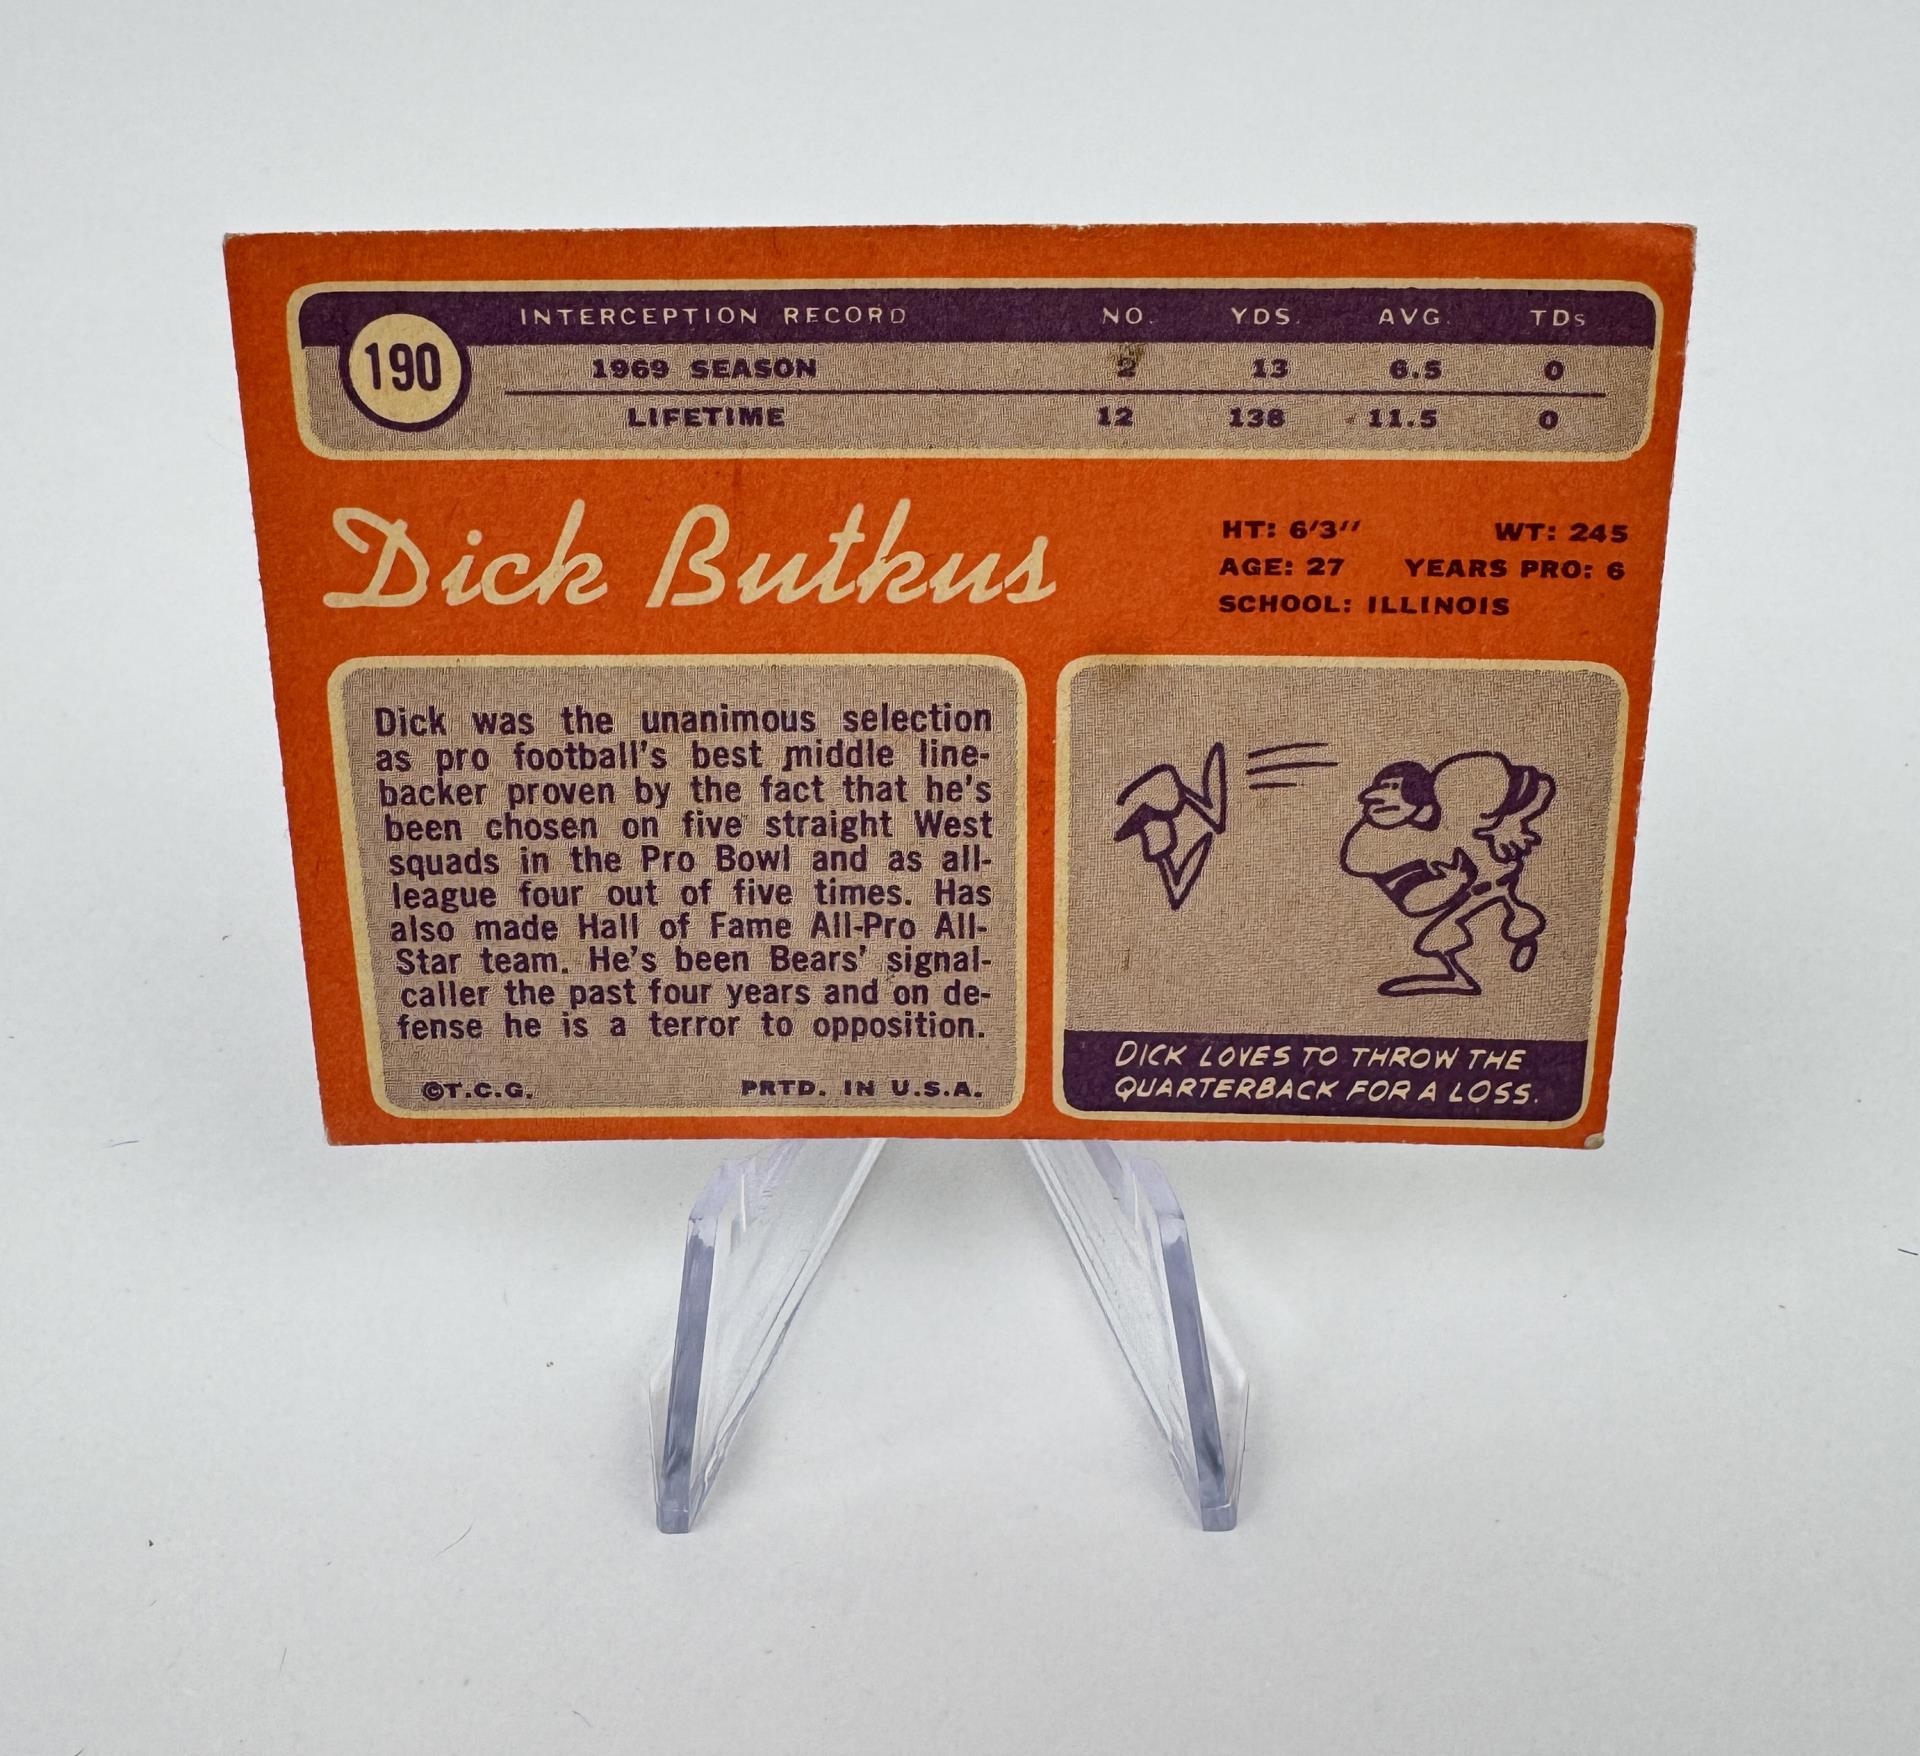 1970 Topps Dick Butkus 190 NFL Football Card